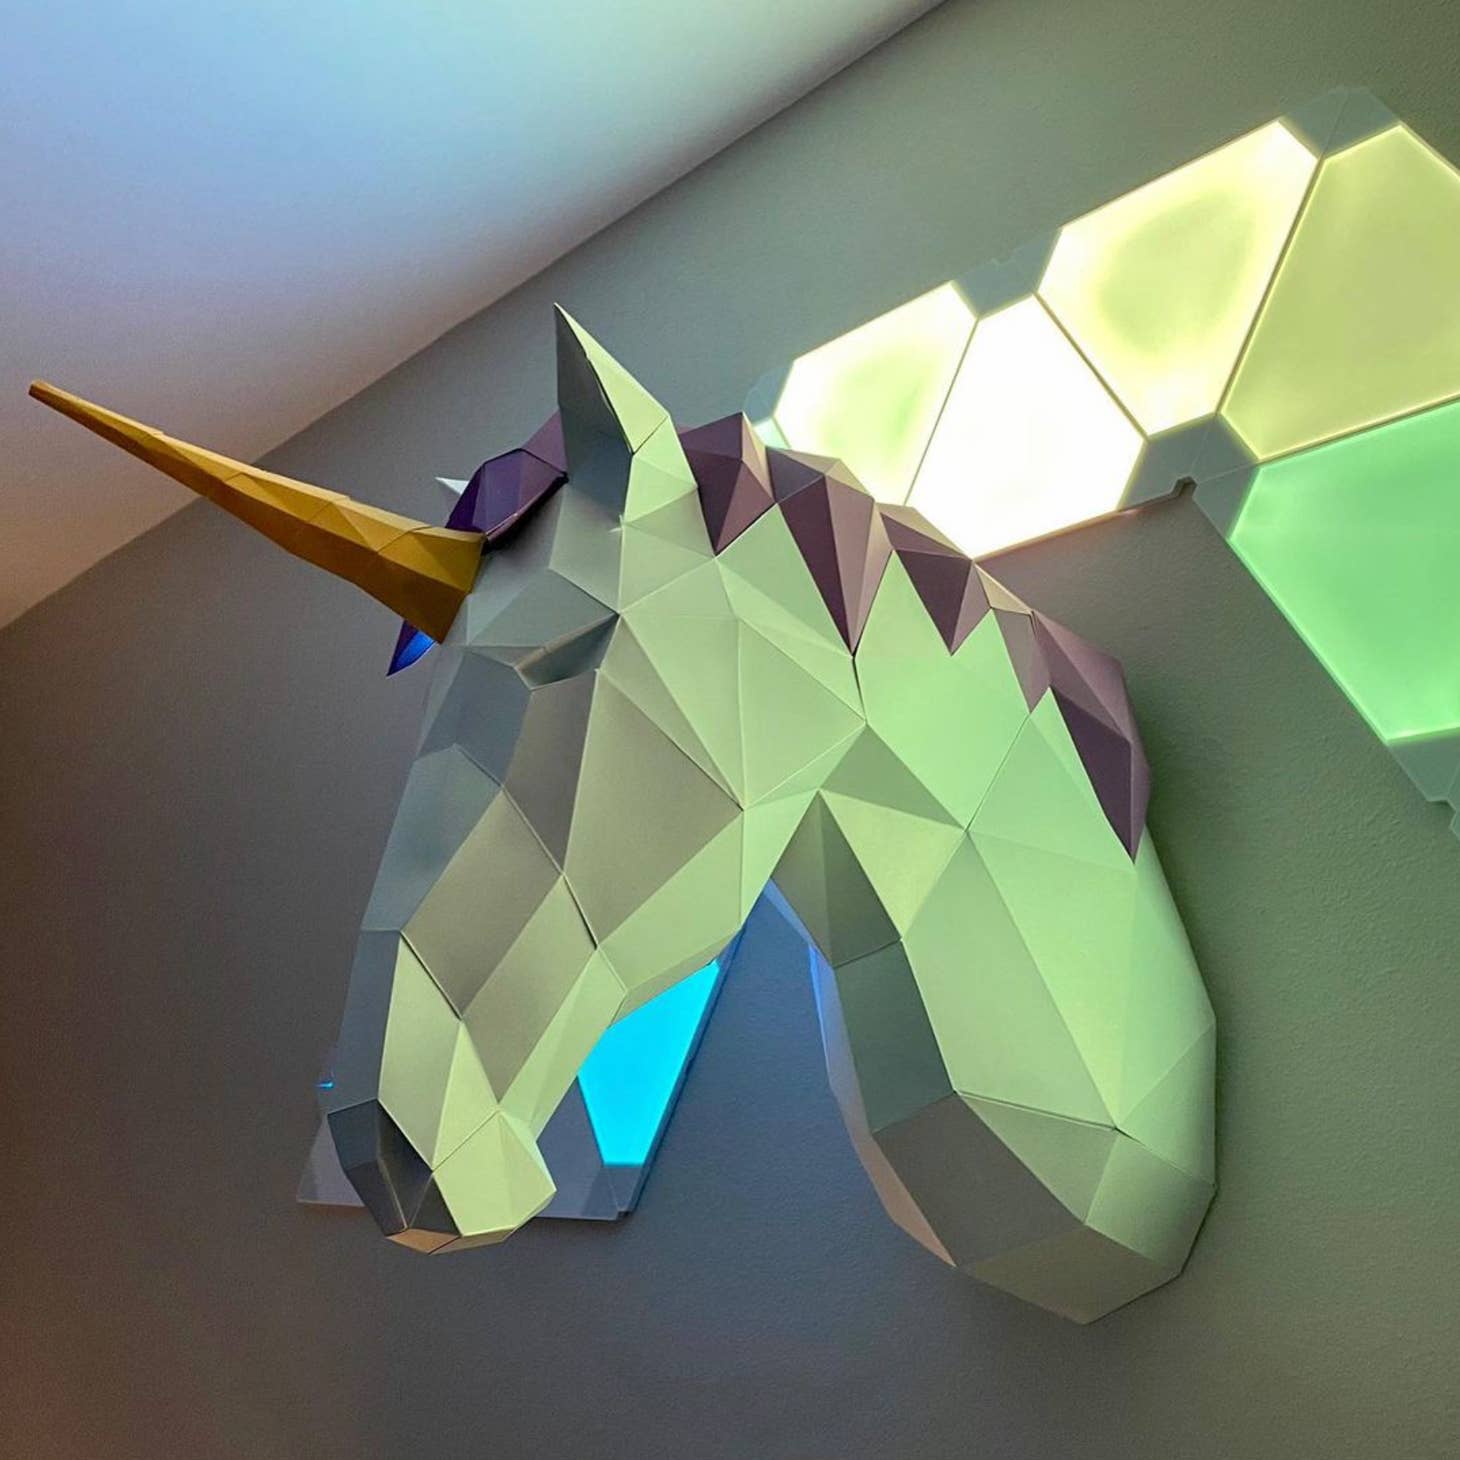 UNIWPU Unicorn 3D Papercraft Wall Art, Animal Origami Model